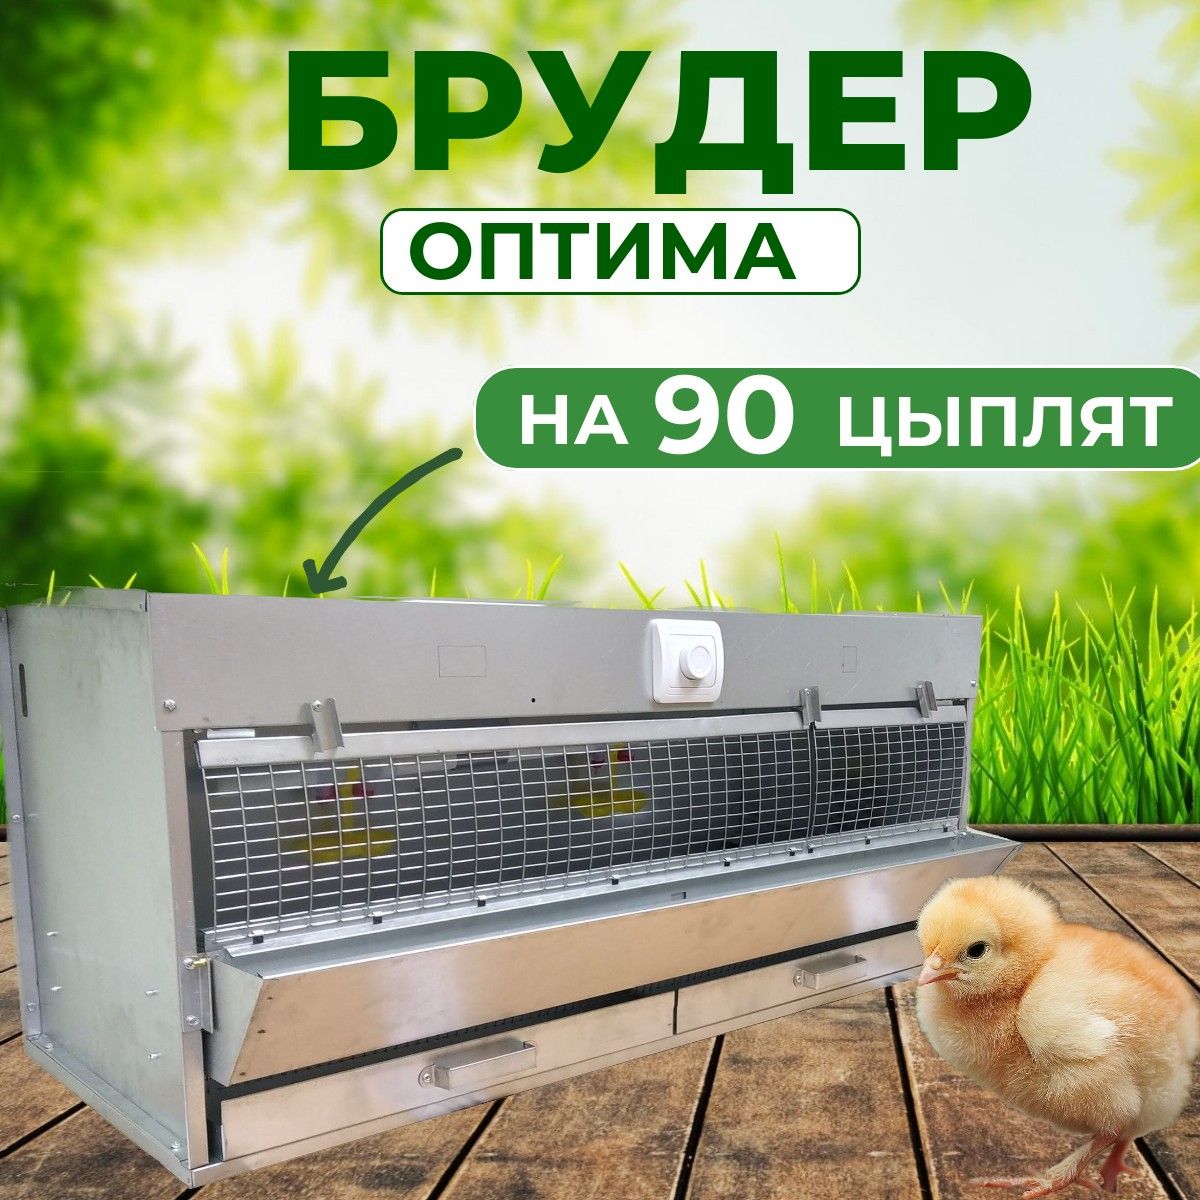 Брудер для цыплят Подворье Оптима, на 90 цыплят, серый, металлический, 65x46x99 см